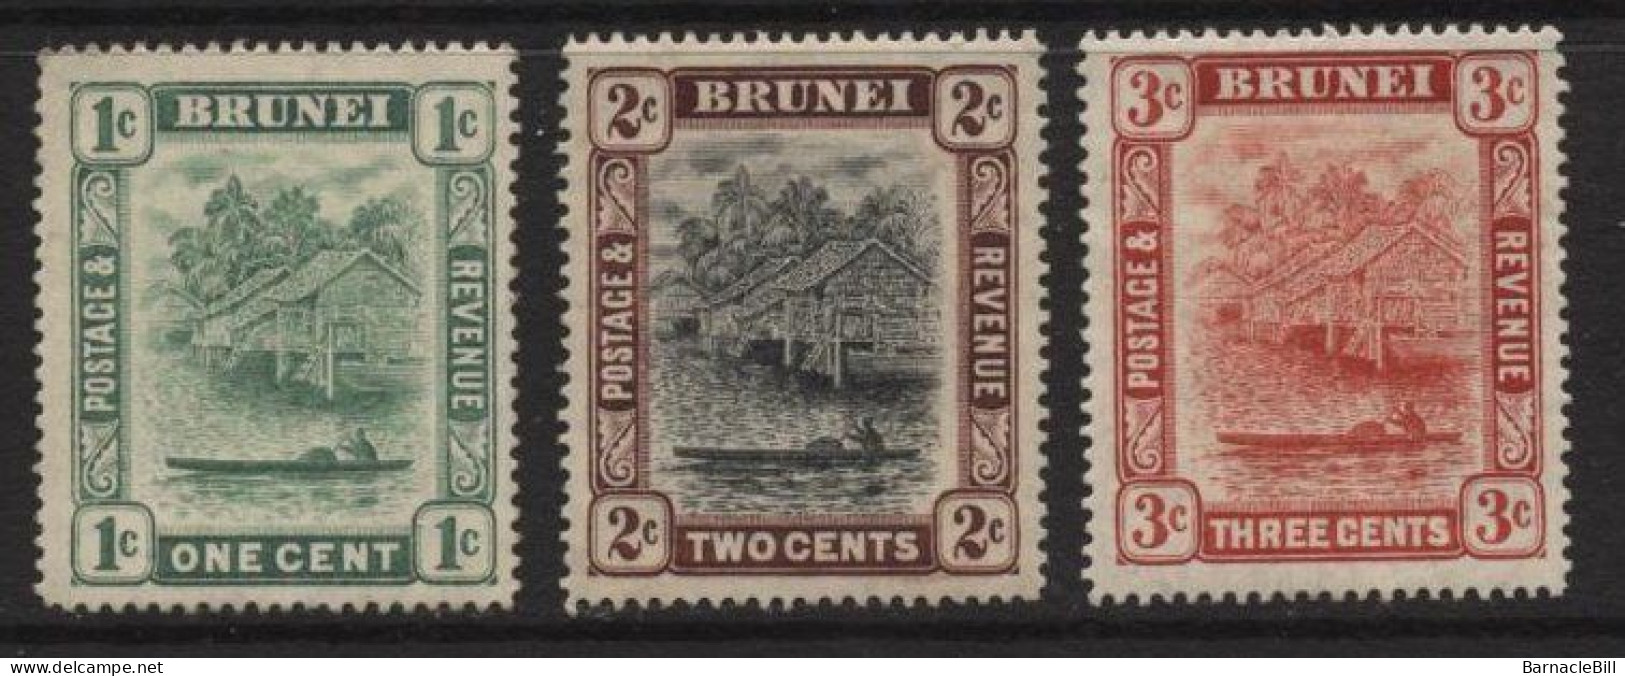 Brunei (18) 1908 Issue. Watermark Multiple Crown CA. 3 Values. Unused. Hinged. - Brunei (...-1984)